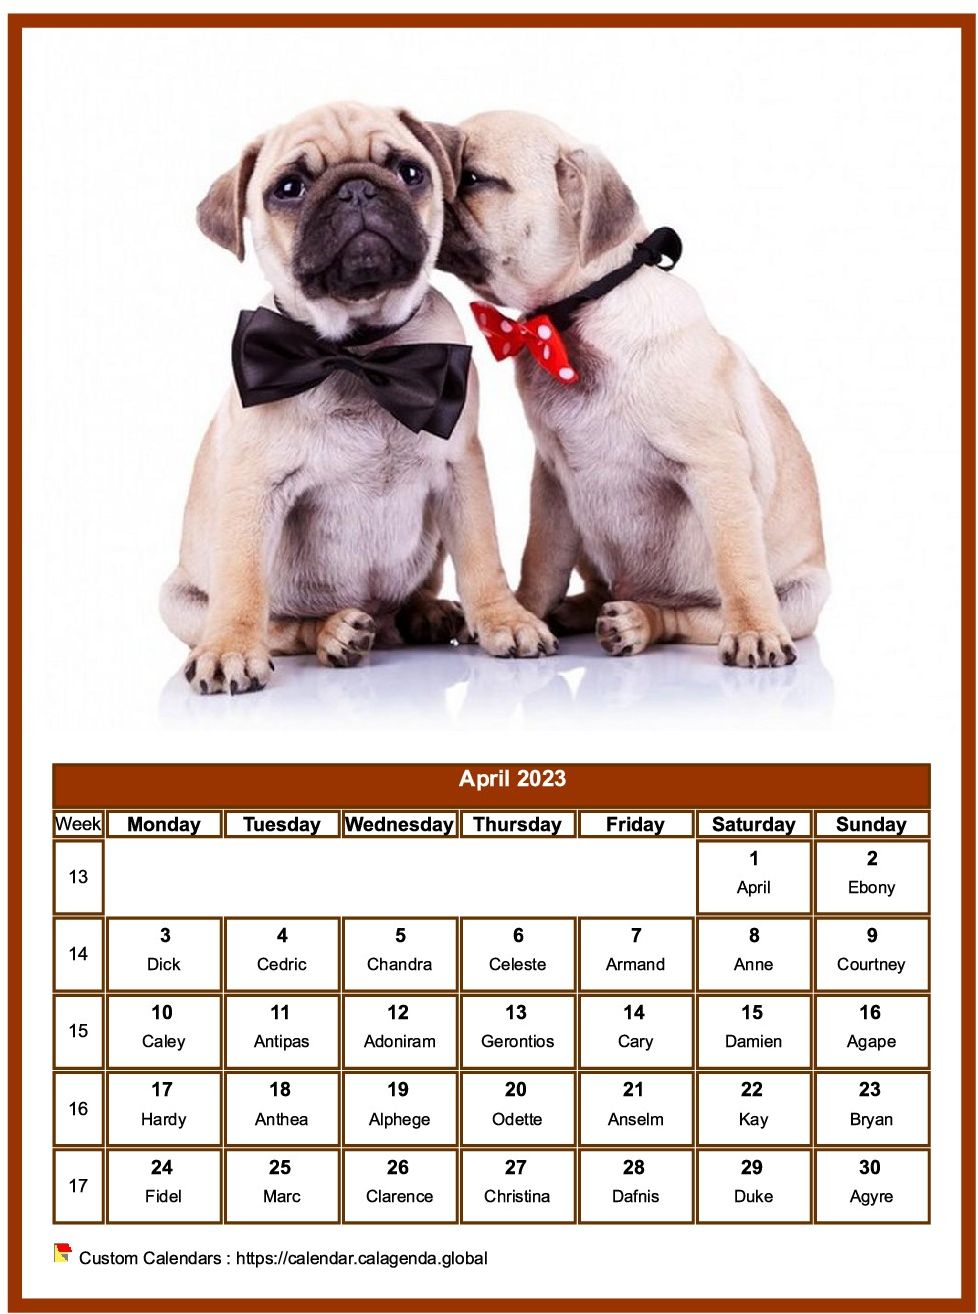 Calendar April 2023 dogs